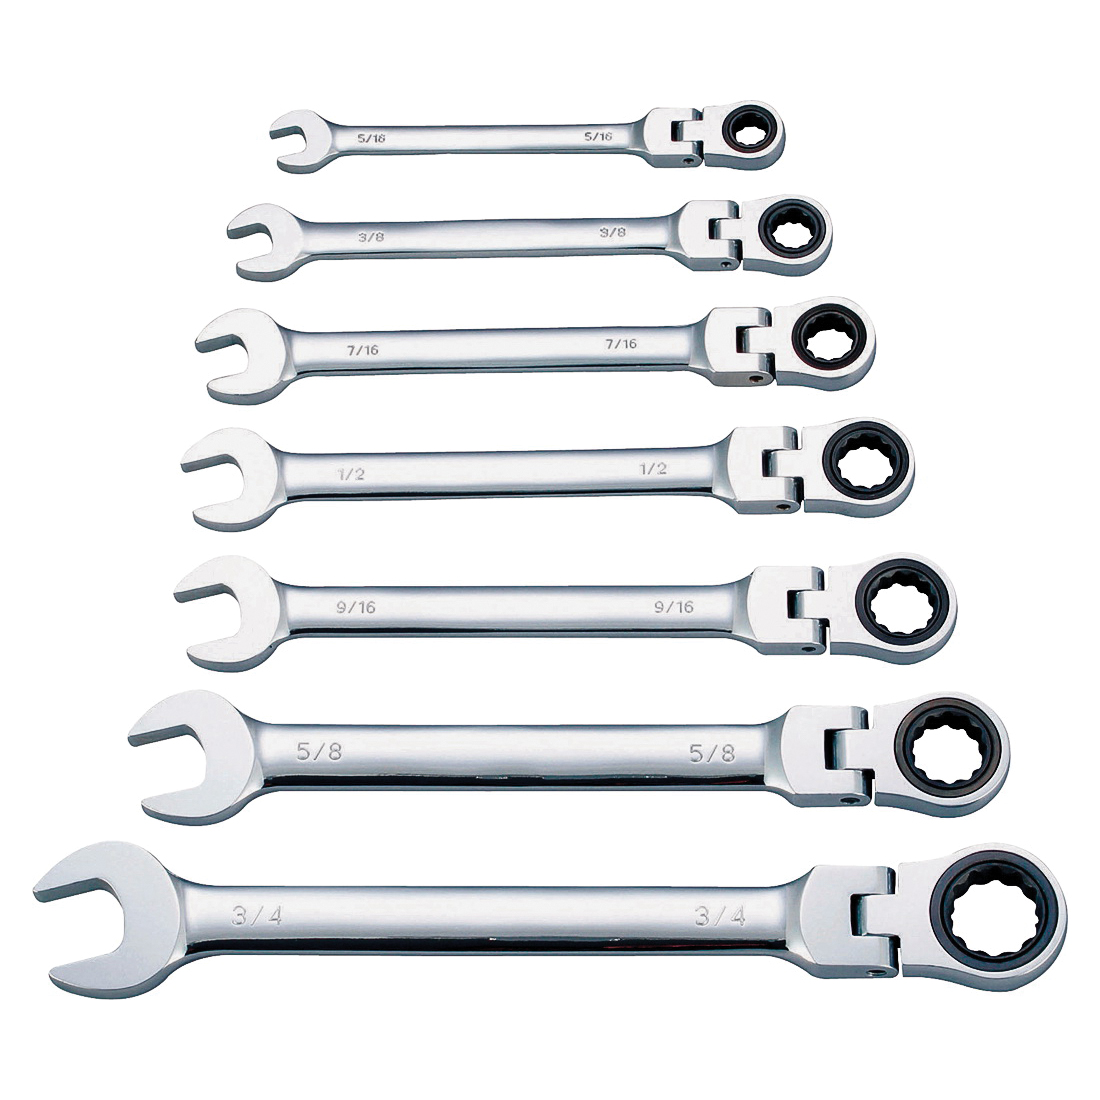 FPG7I Wrench Set, 7-Piece, Chrome Vanadium Steel, Mirror Polish, Silver, Specifications: SAE Measurement